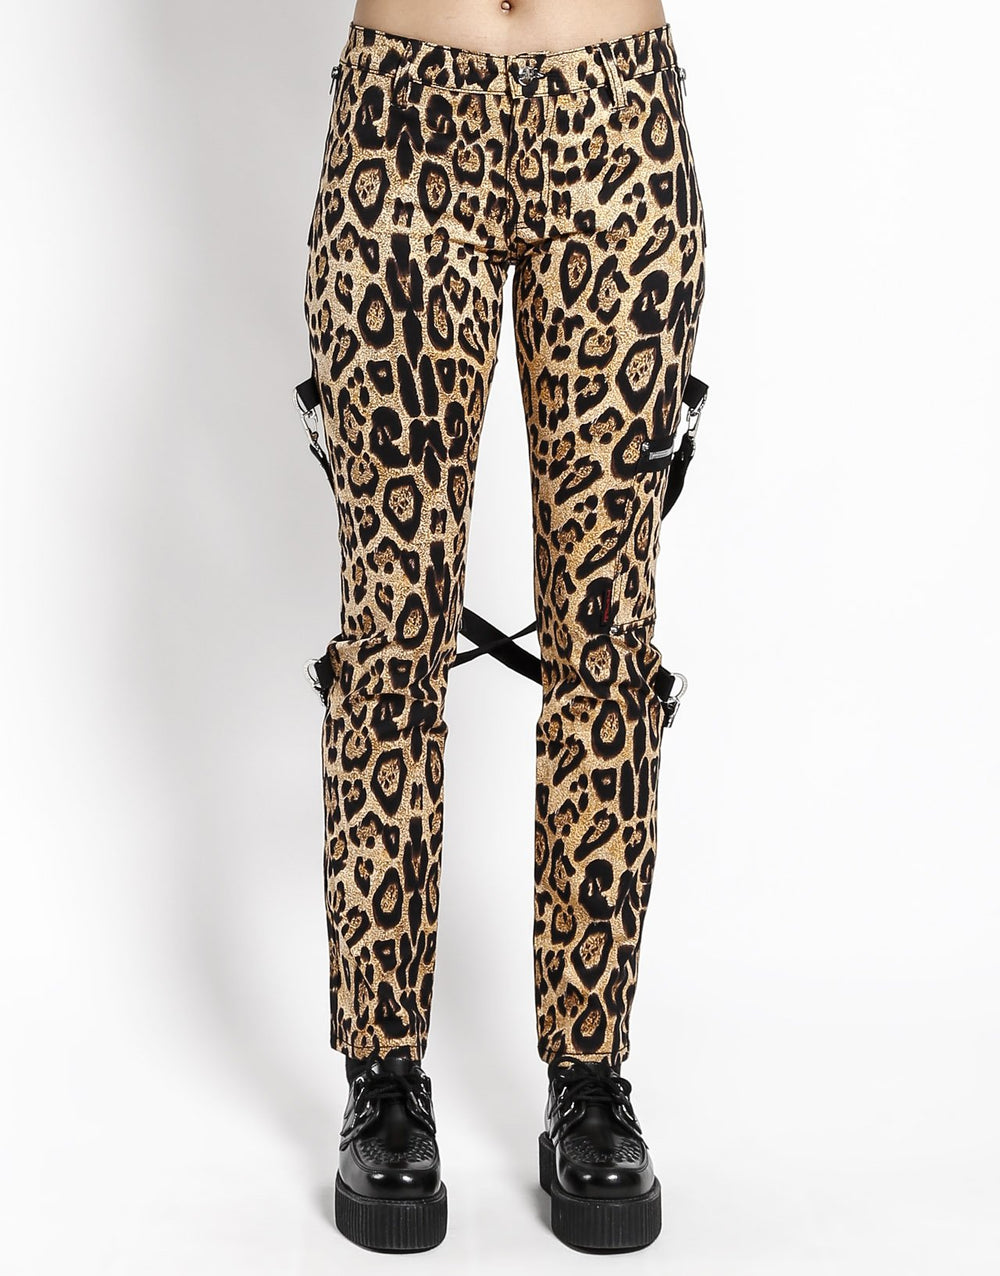 pnroktd Womens Boho Pants Long Leopard Print High India | Ubuy